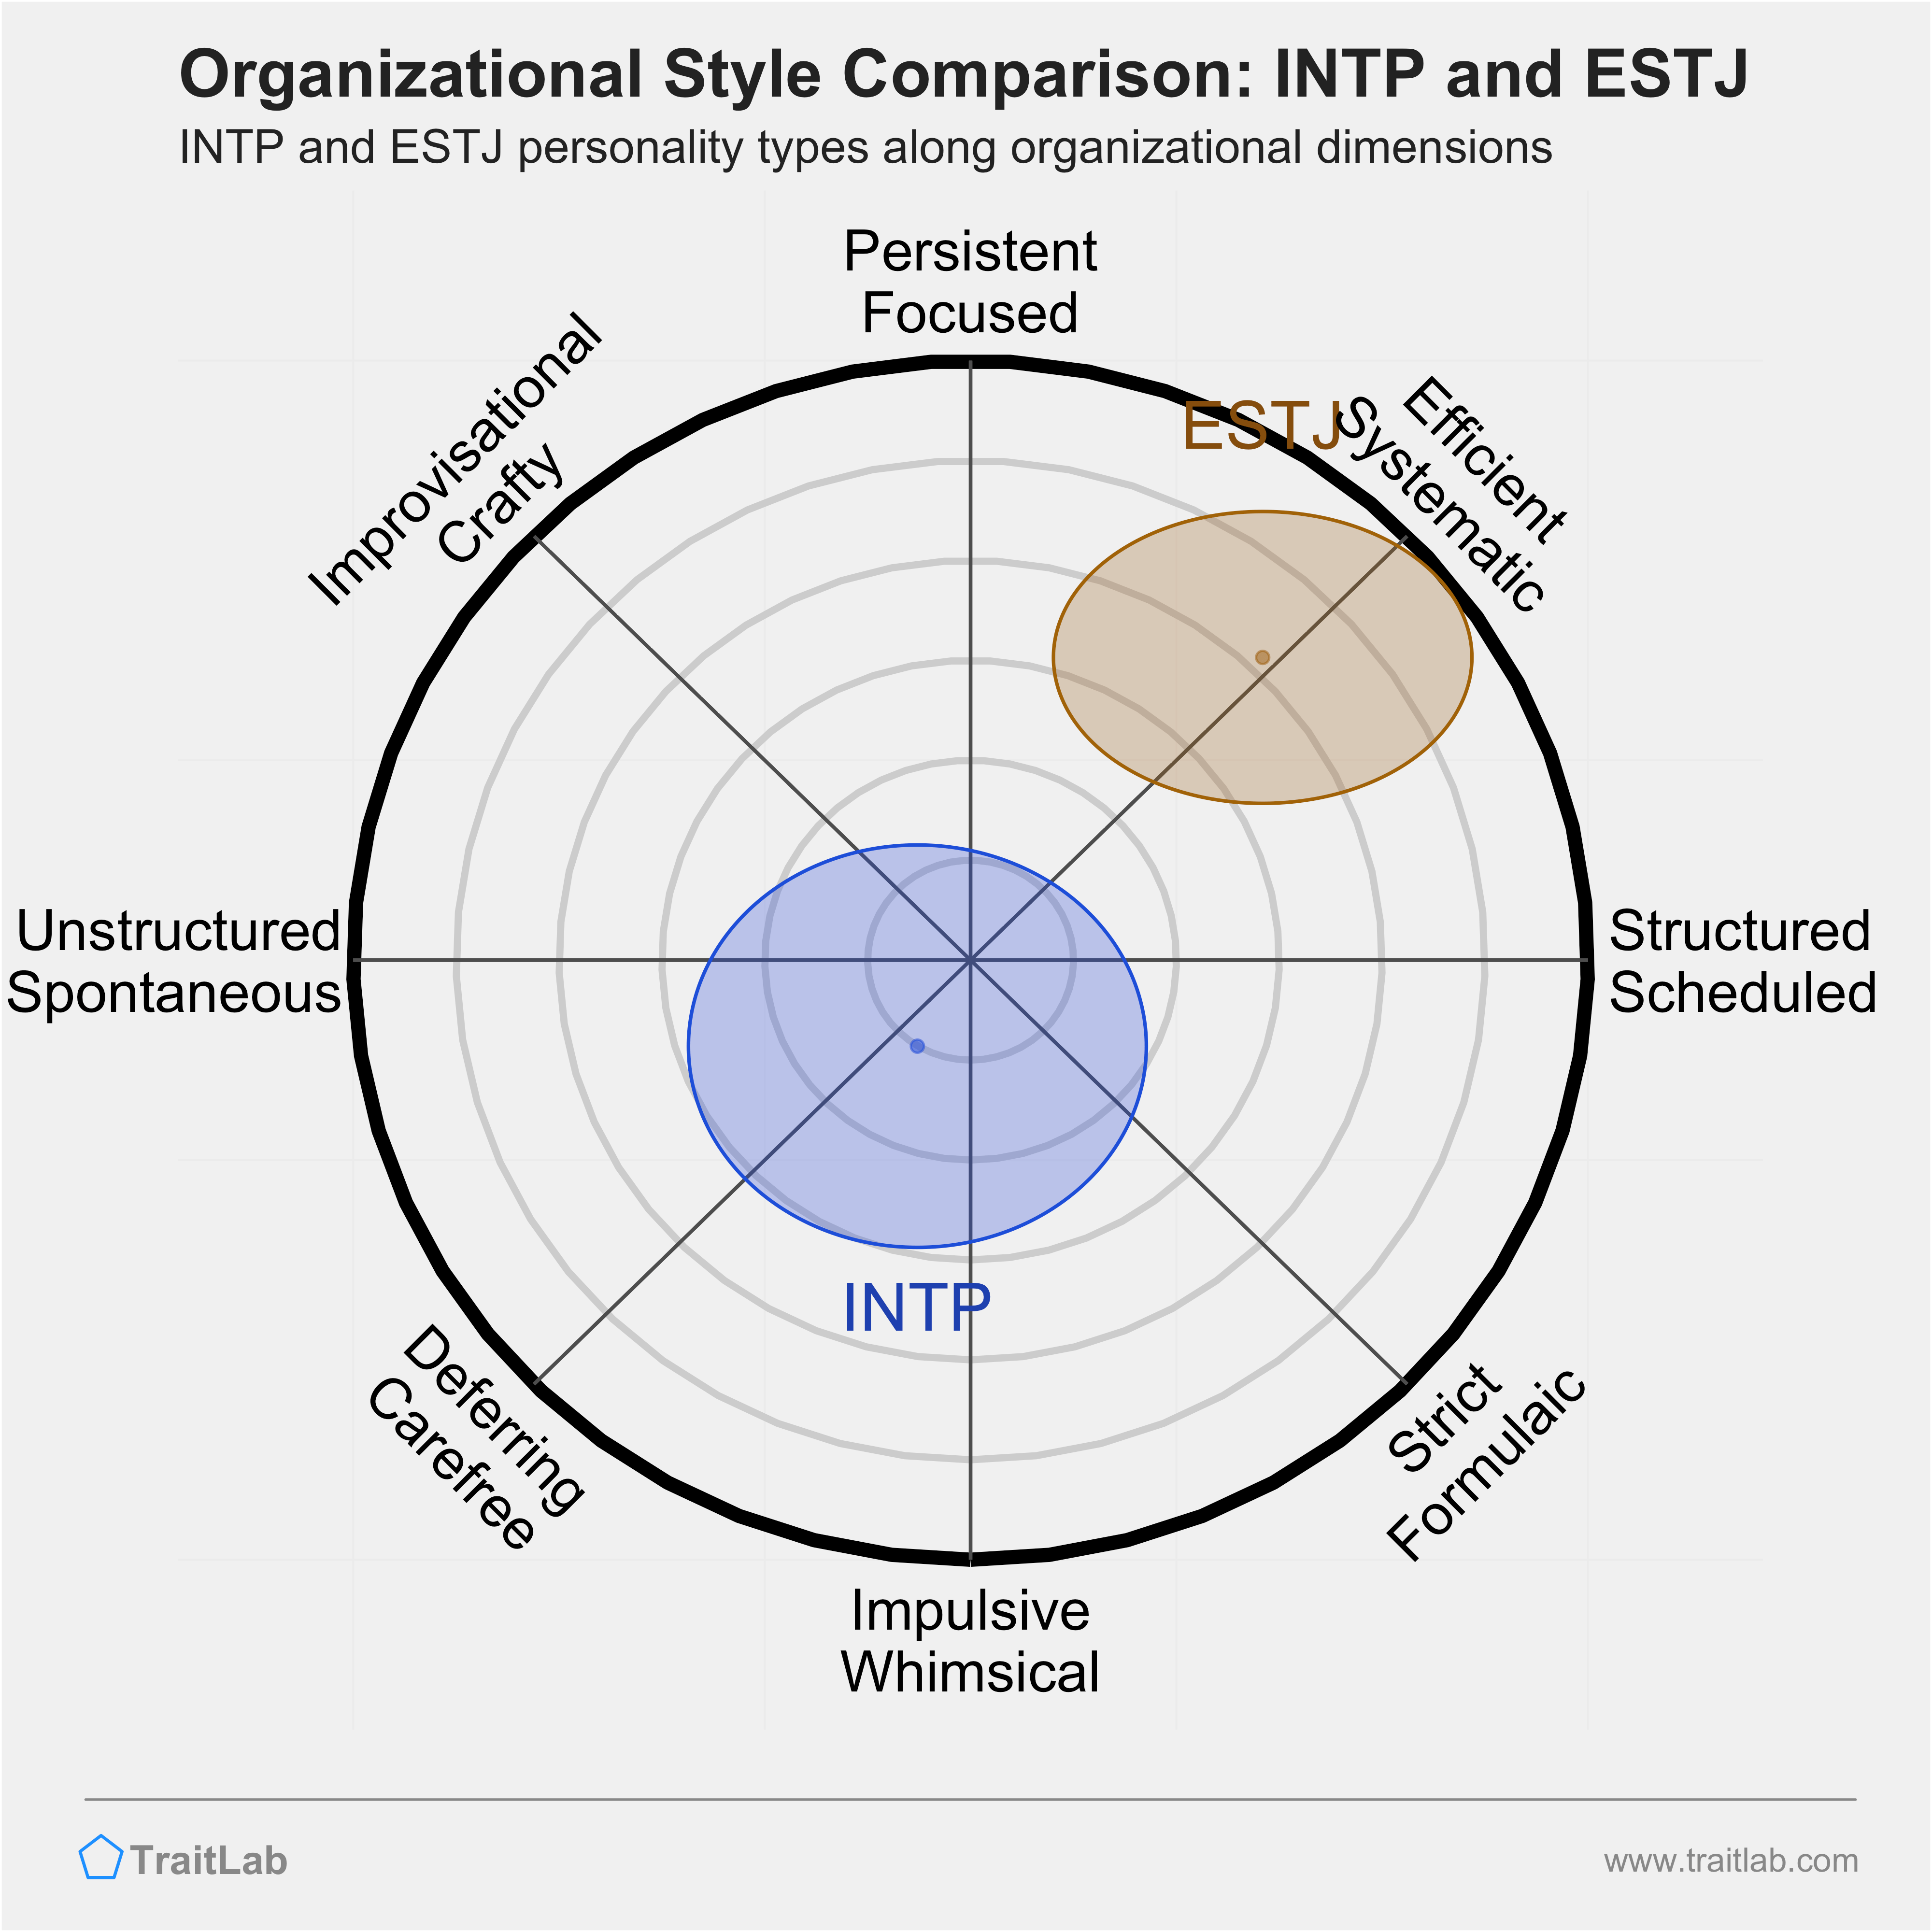 INTP and ESTJ comparison across organizational dimensions